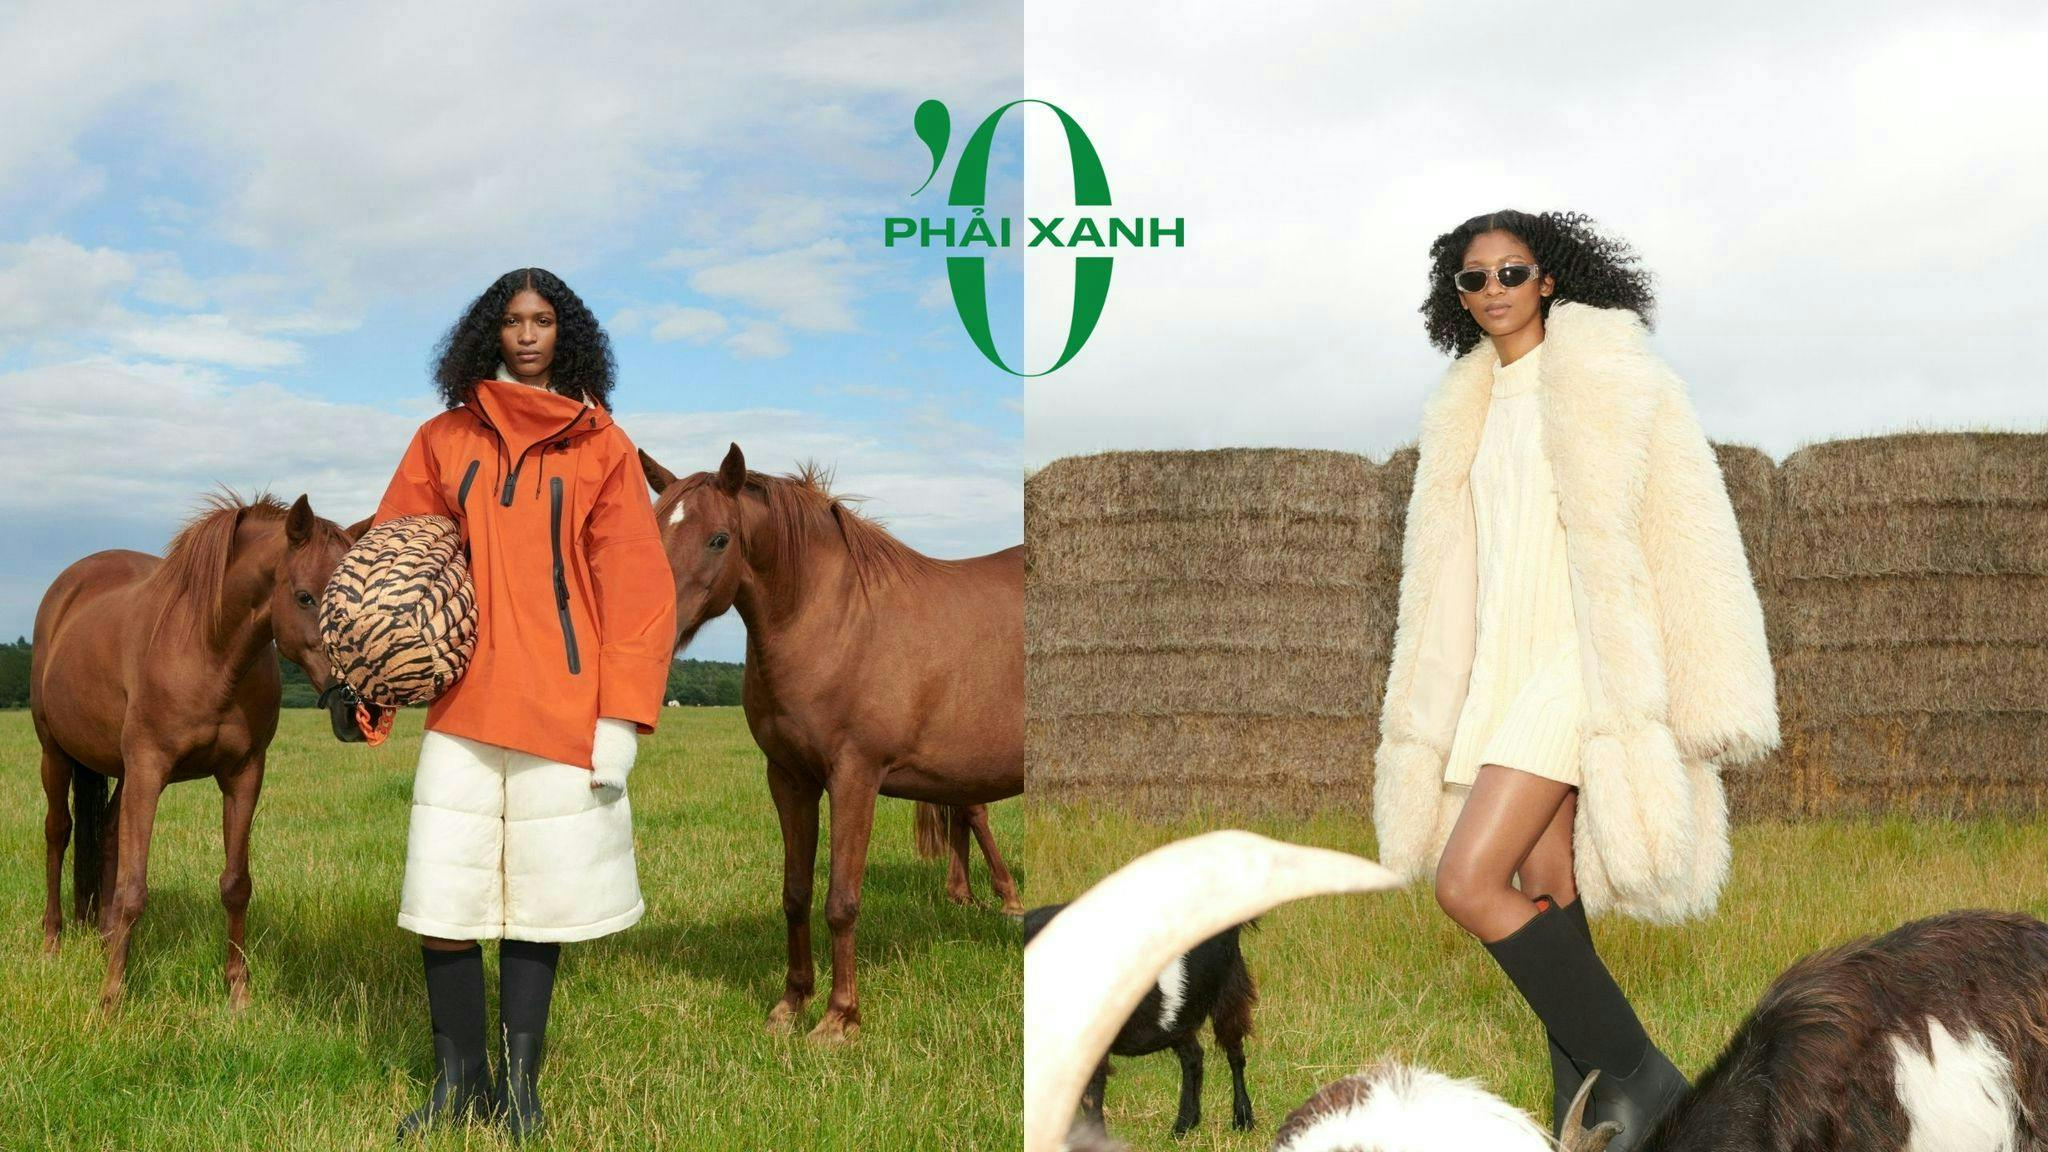 person human horse animal mammal coat clothing outdoors nature field